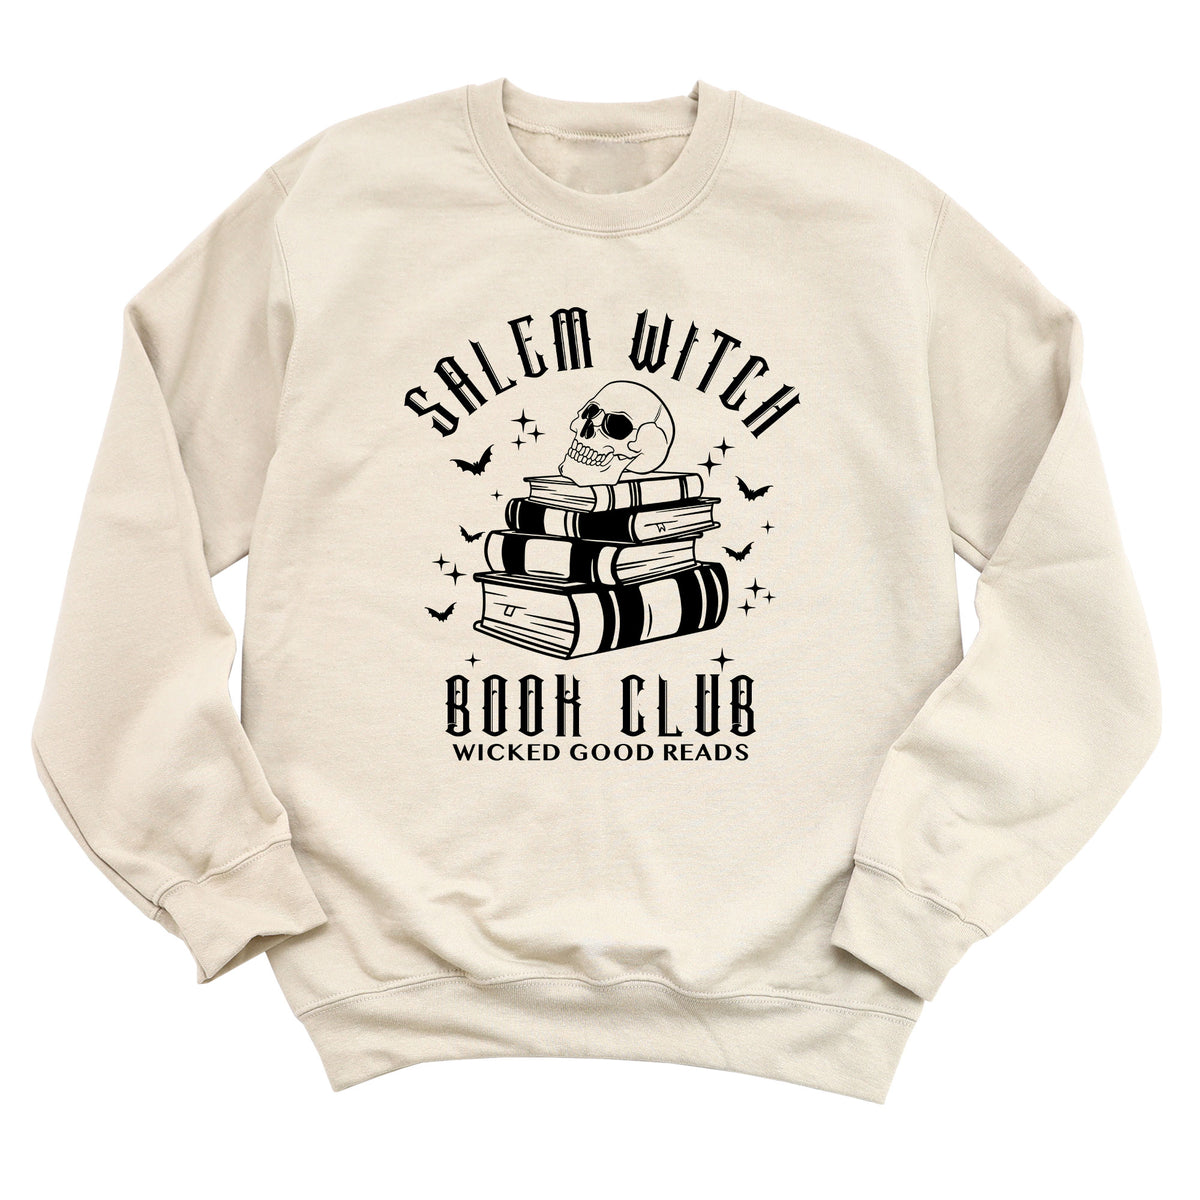 Salem Witch Book Club Sweatshirt